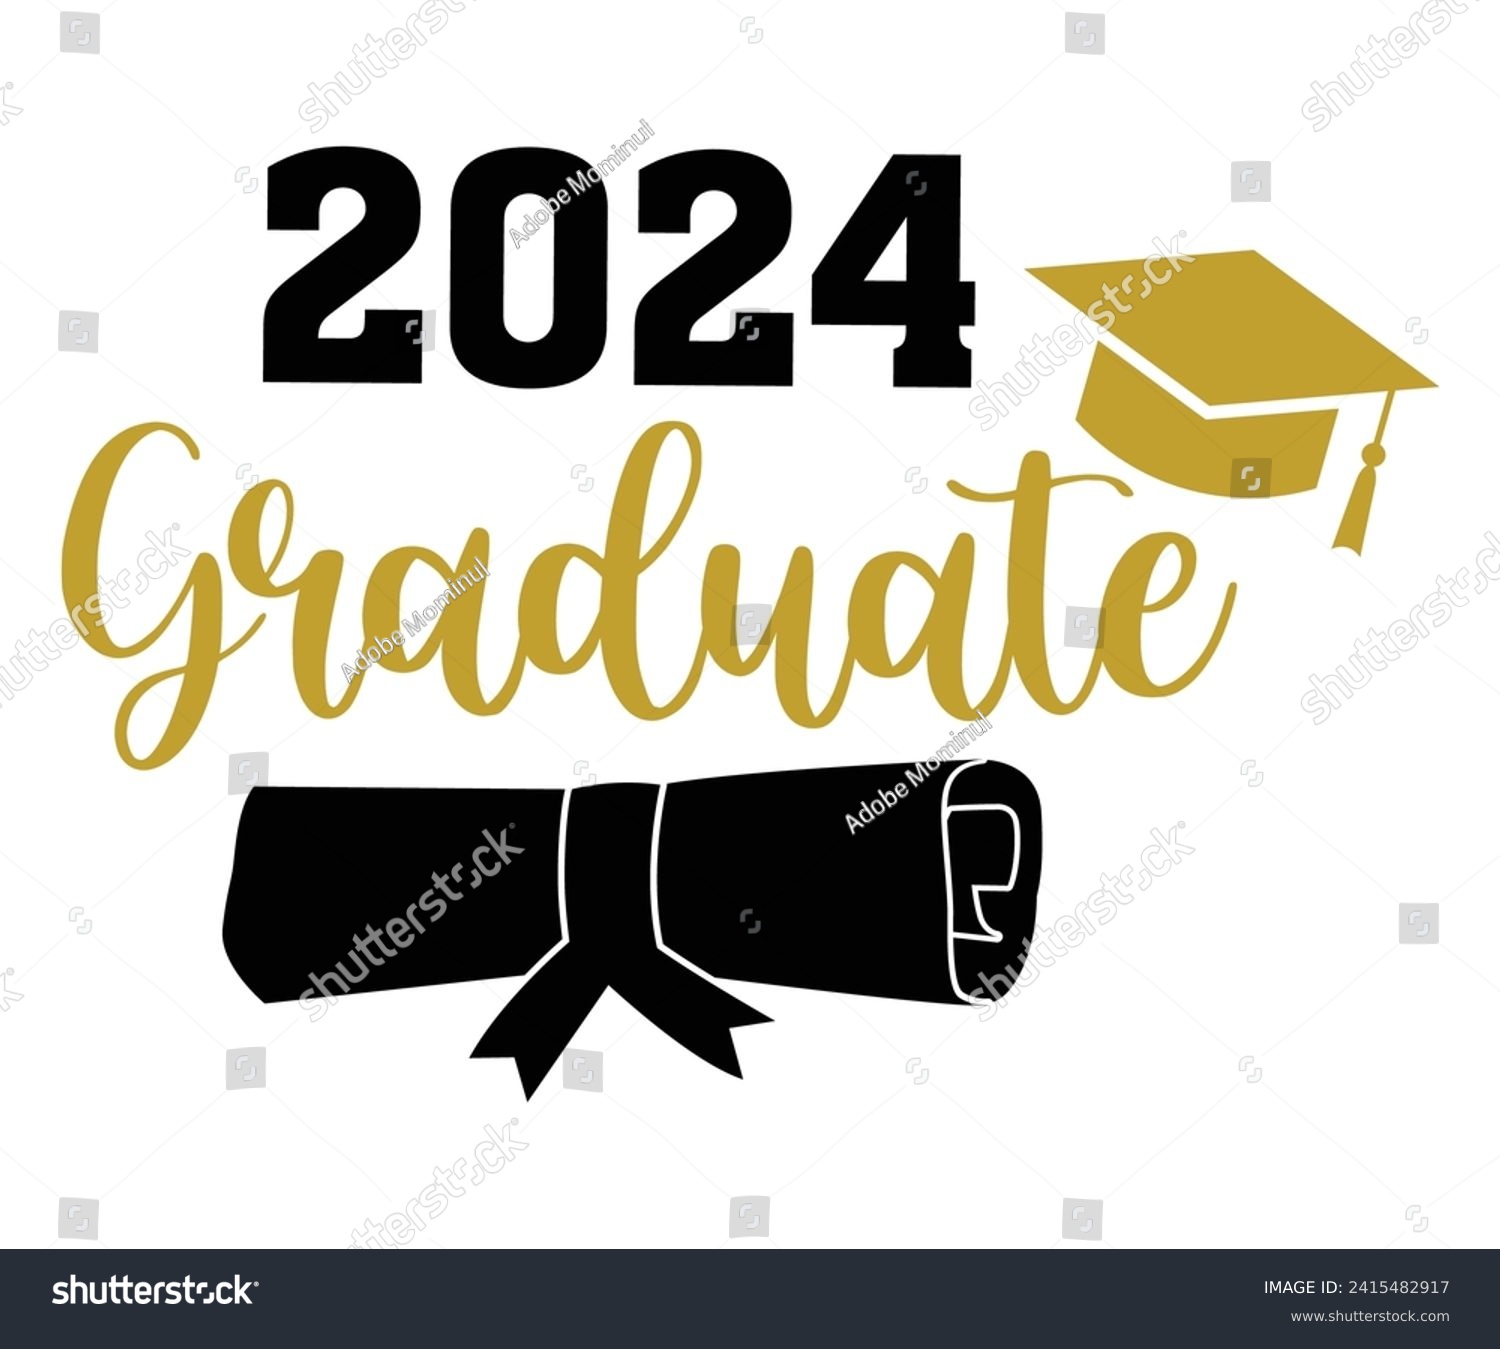 SVG of Graduation Svg,Senior Svg,Graduate T shirt,Graduation cap,Graduation 2024 Shirt,Family Graduation Svg,Pre-K Grad Shirt,Graduation Qoutes,Graduation Gift Shirt,Cut File,Groovy, svg